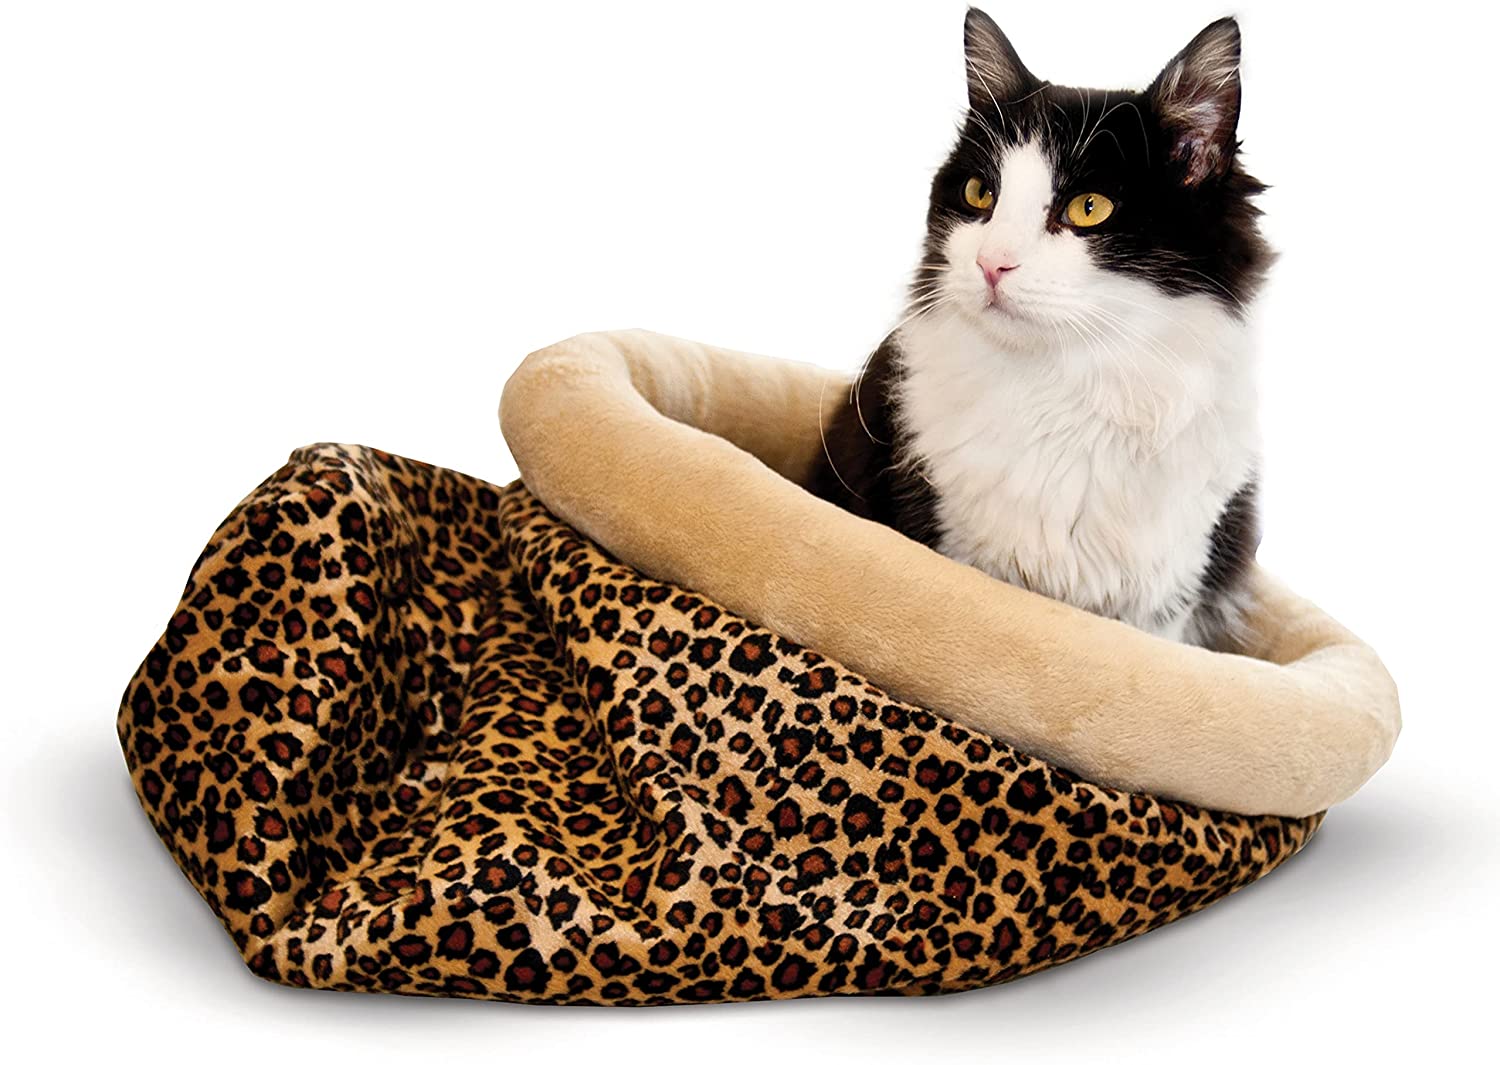 K&H PET PRODUCTS Heated Amazin' Kitty Pad 